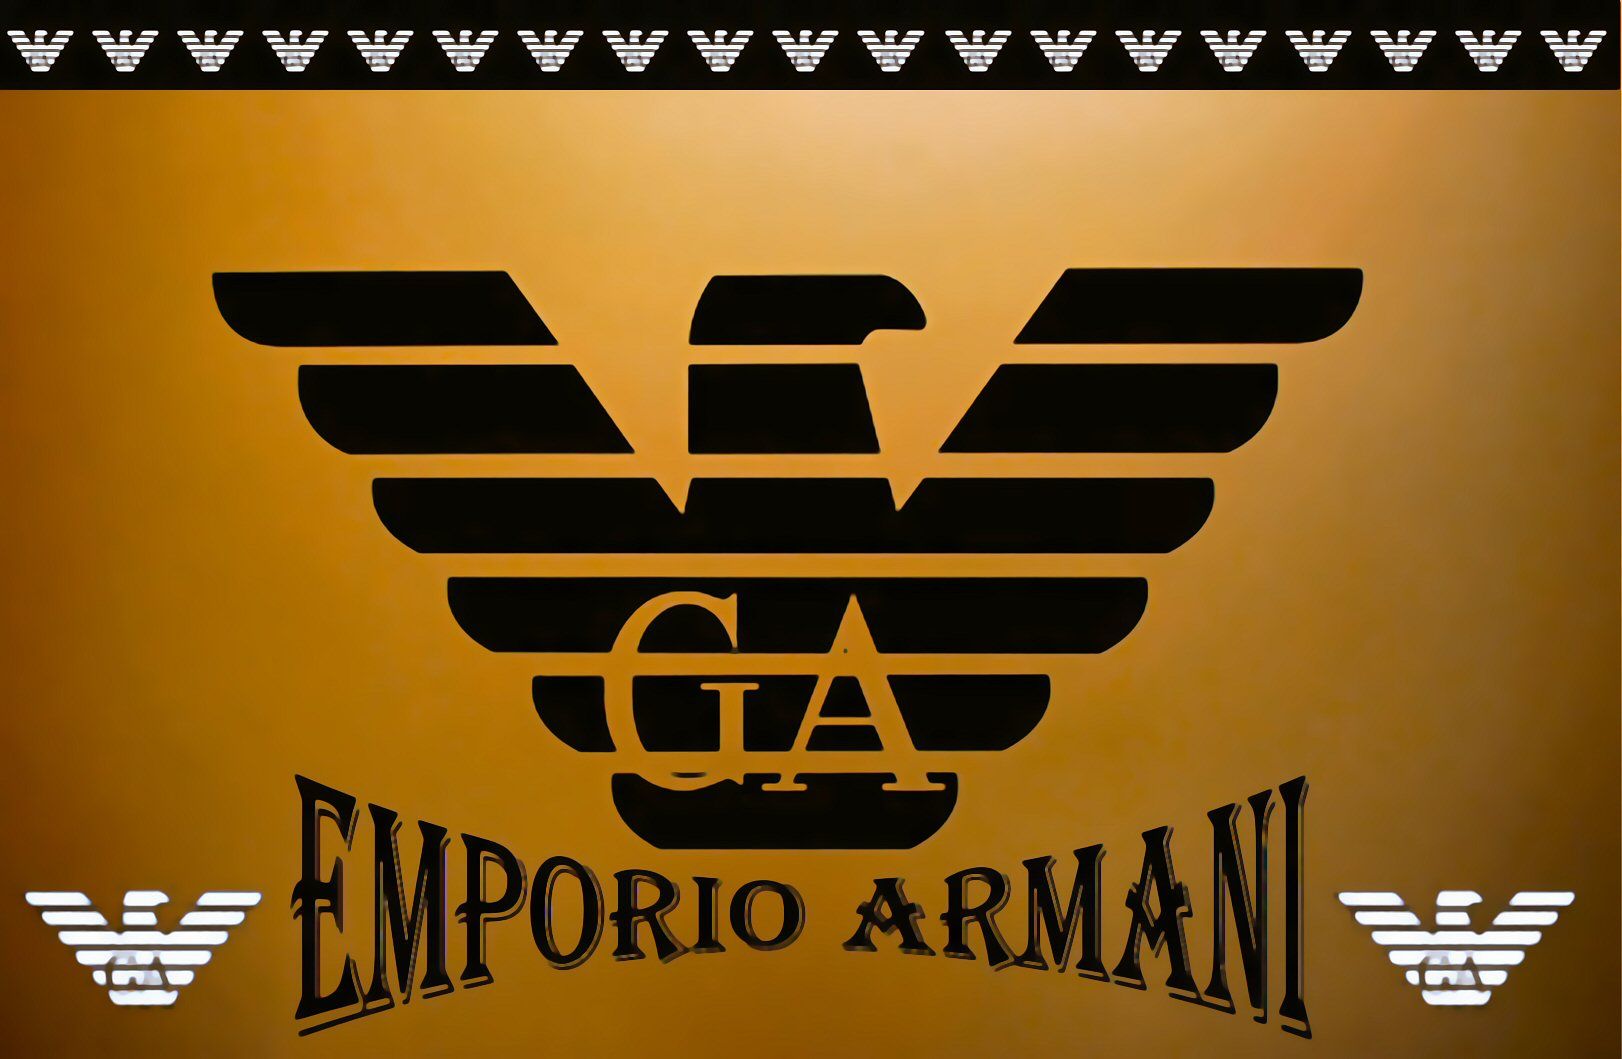 HD armani logo wallpapers